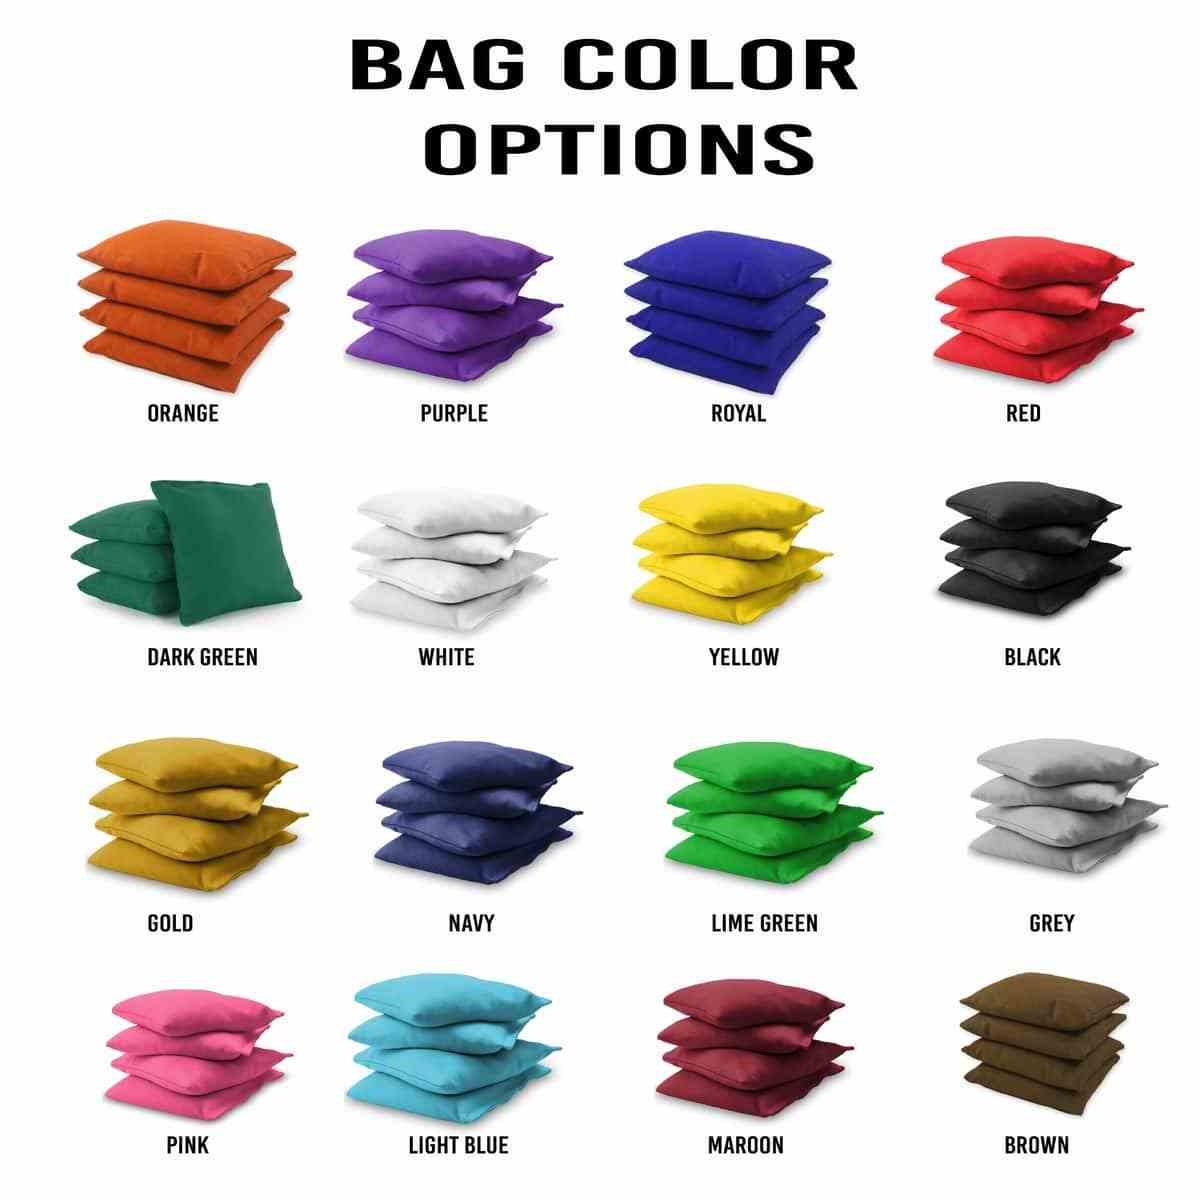 FireDance 2x4 bag colors